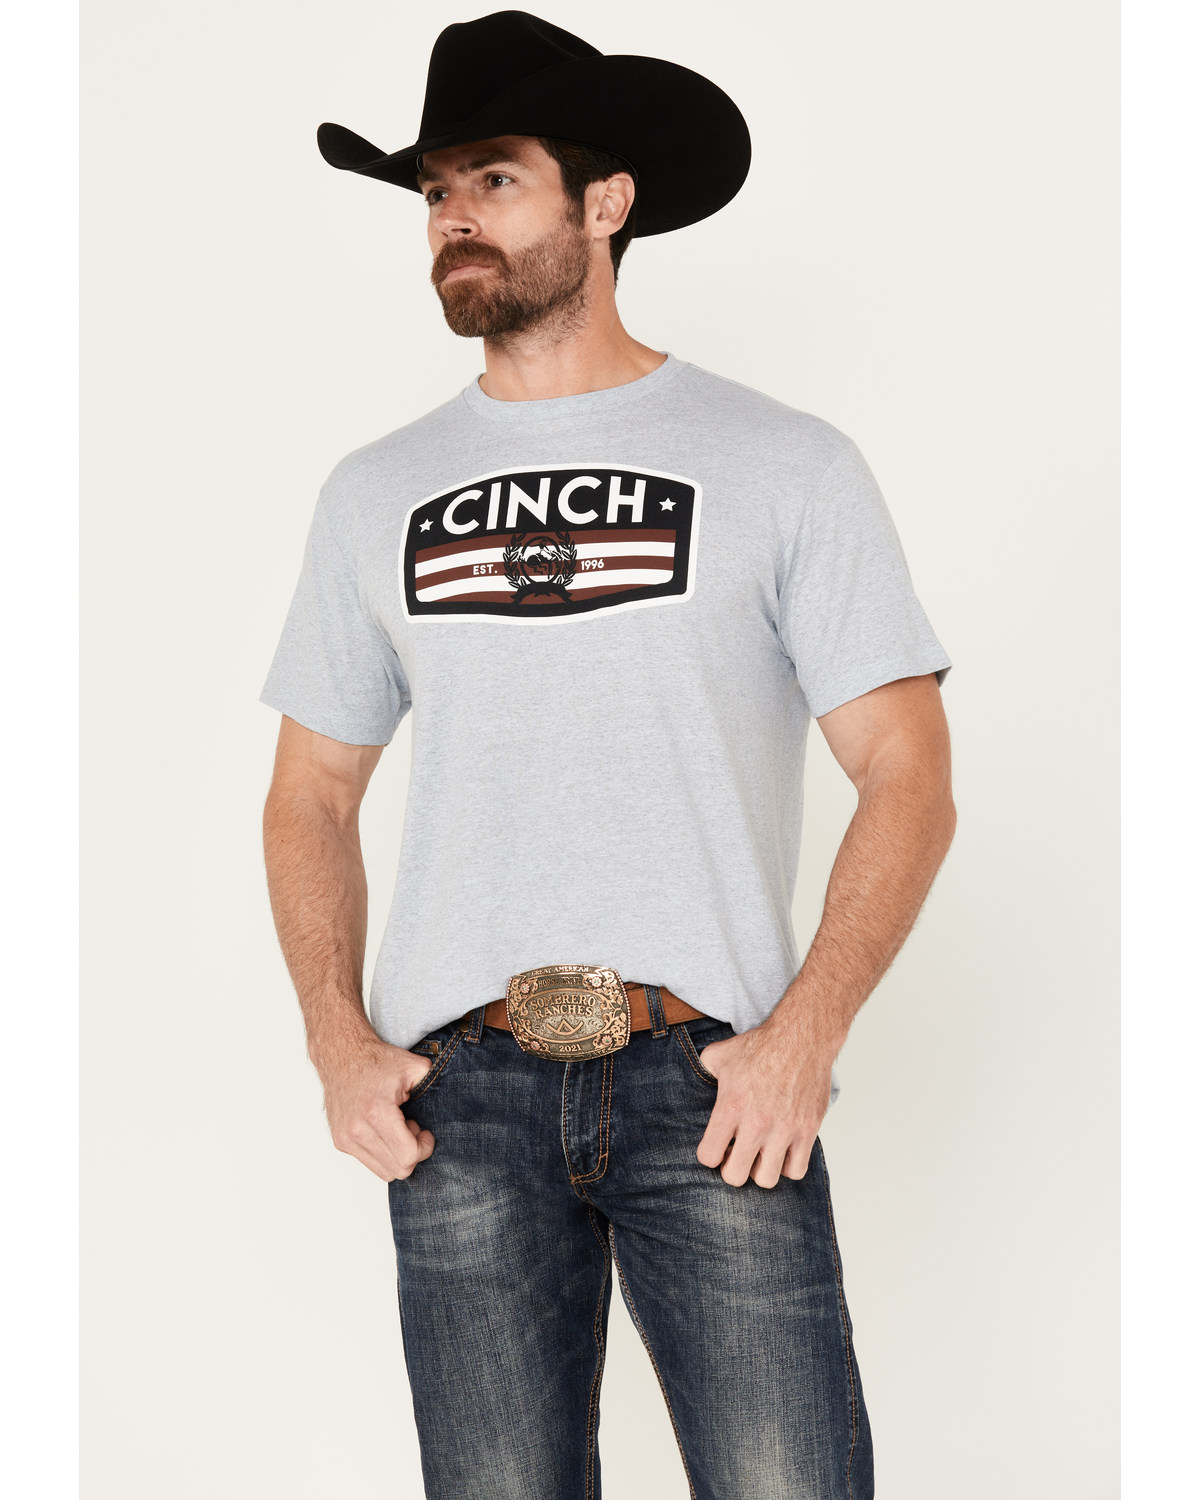 Cinch Men's Americana Logo Short Sleeve Graphic T-Shirt